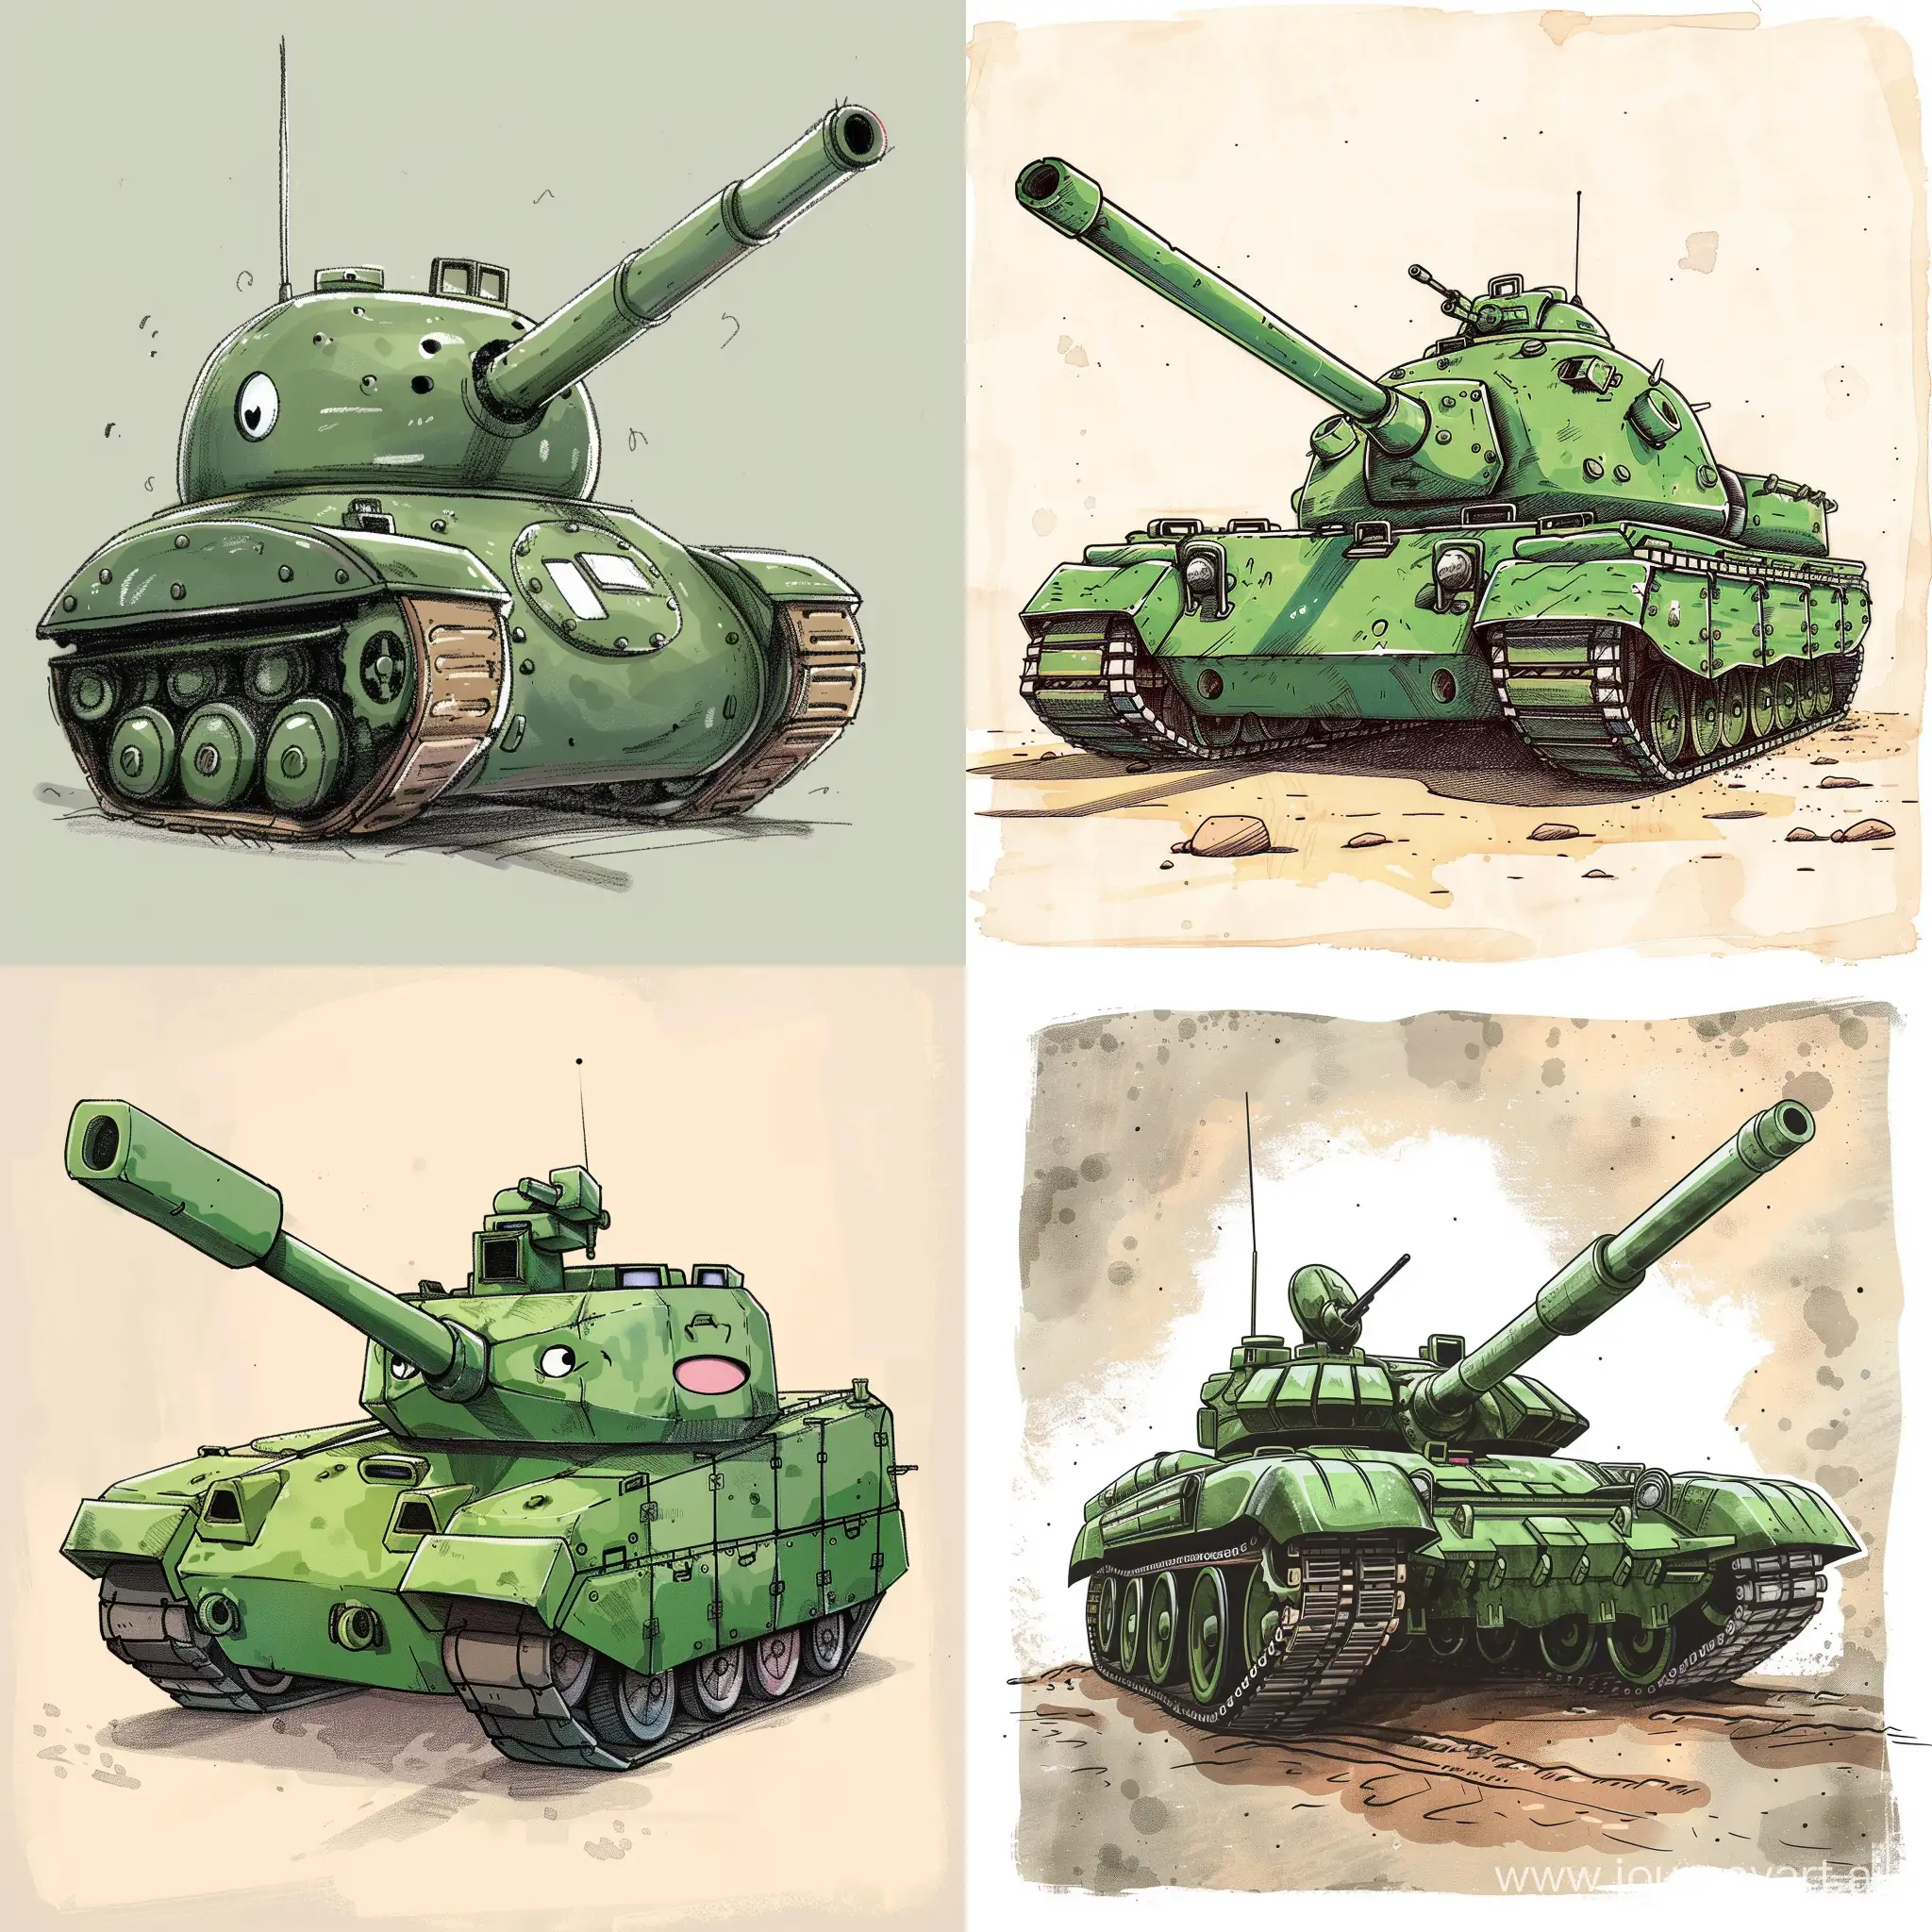 Funny-Cartoon-Tank-in-Green-Armor-Sketch-Style